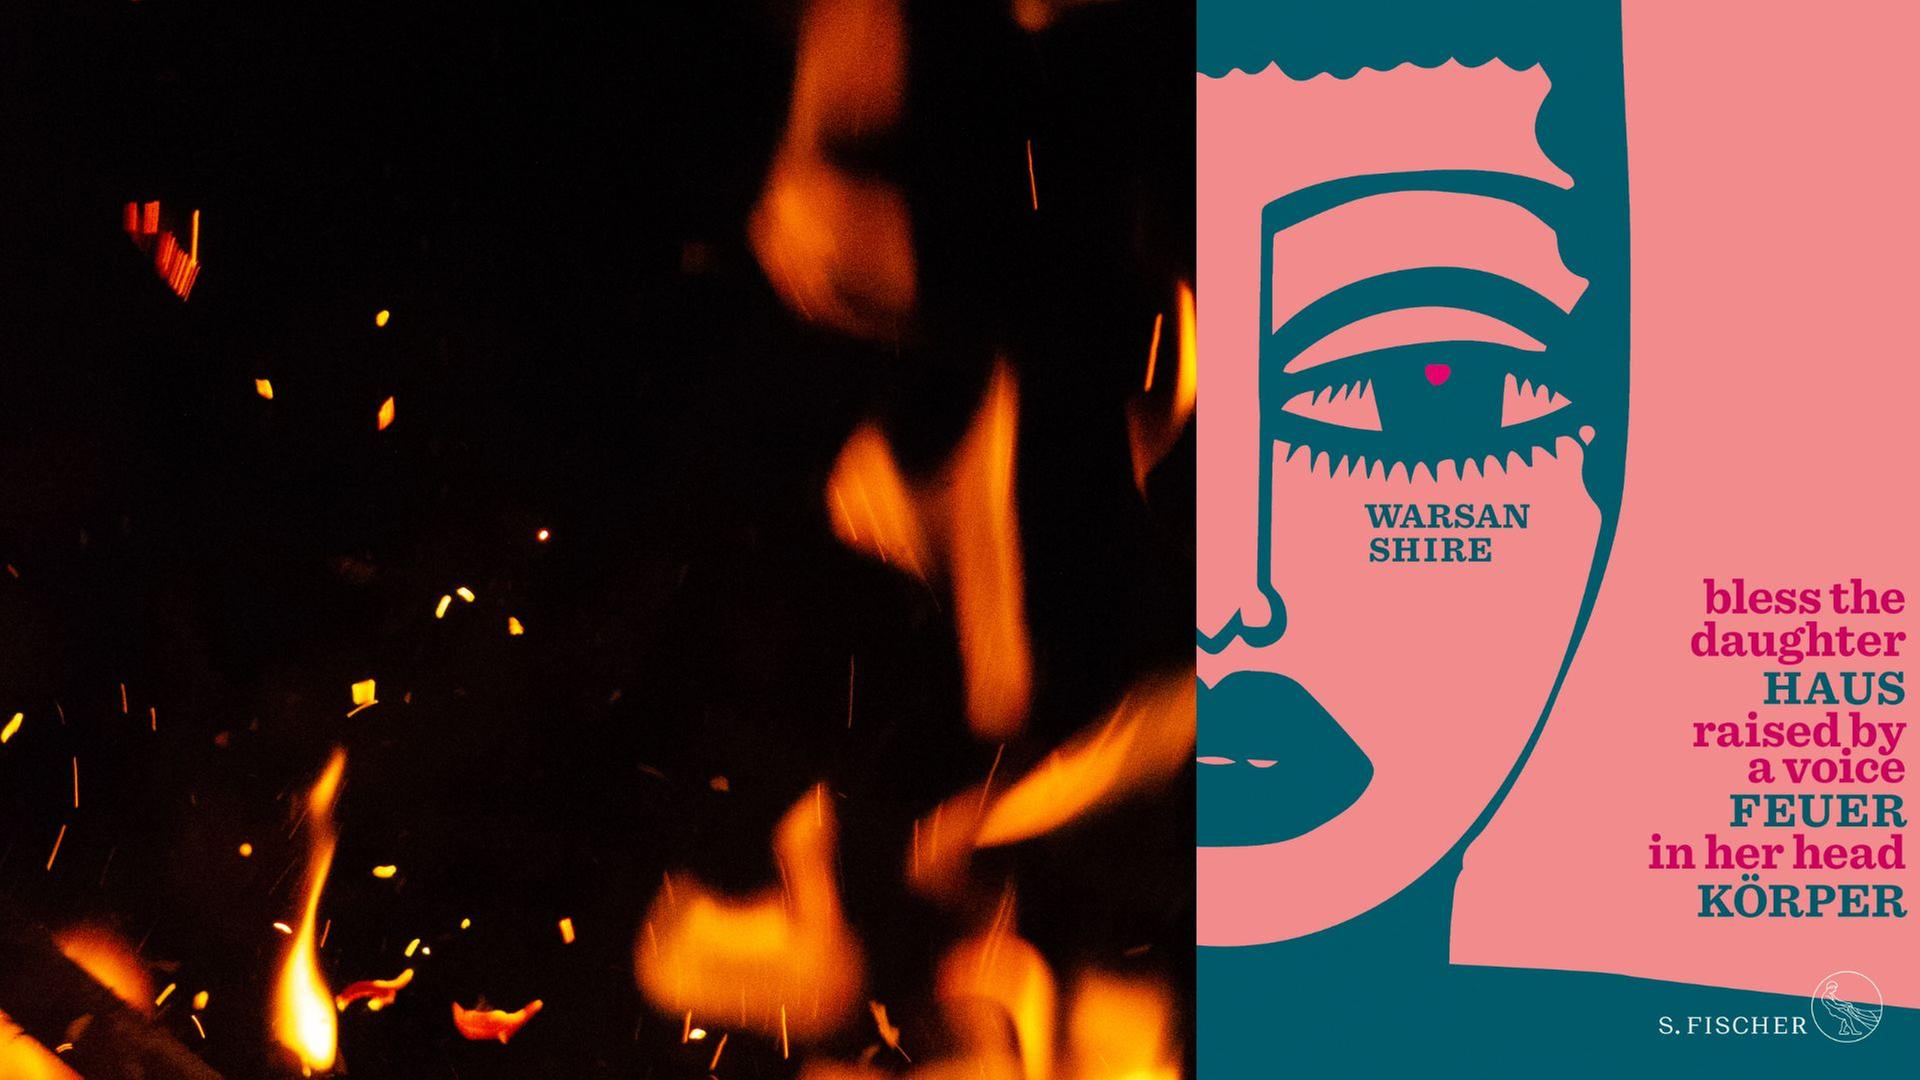 Warsan Shire: "Haus Feuer Körper"